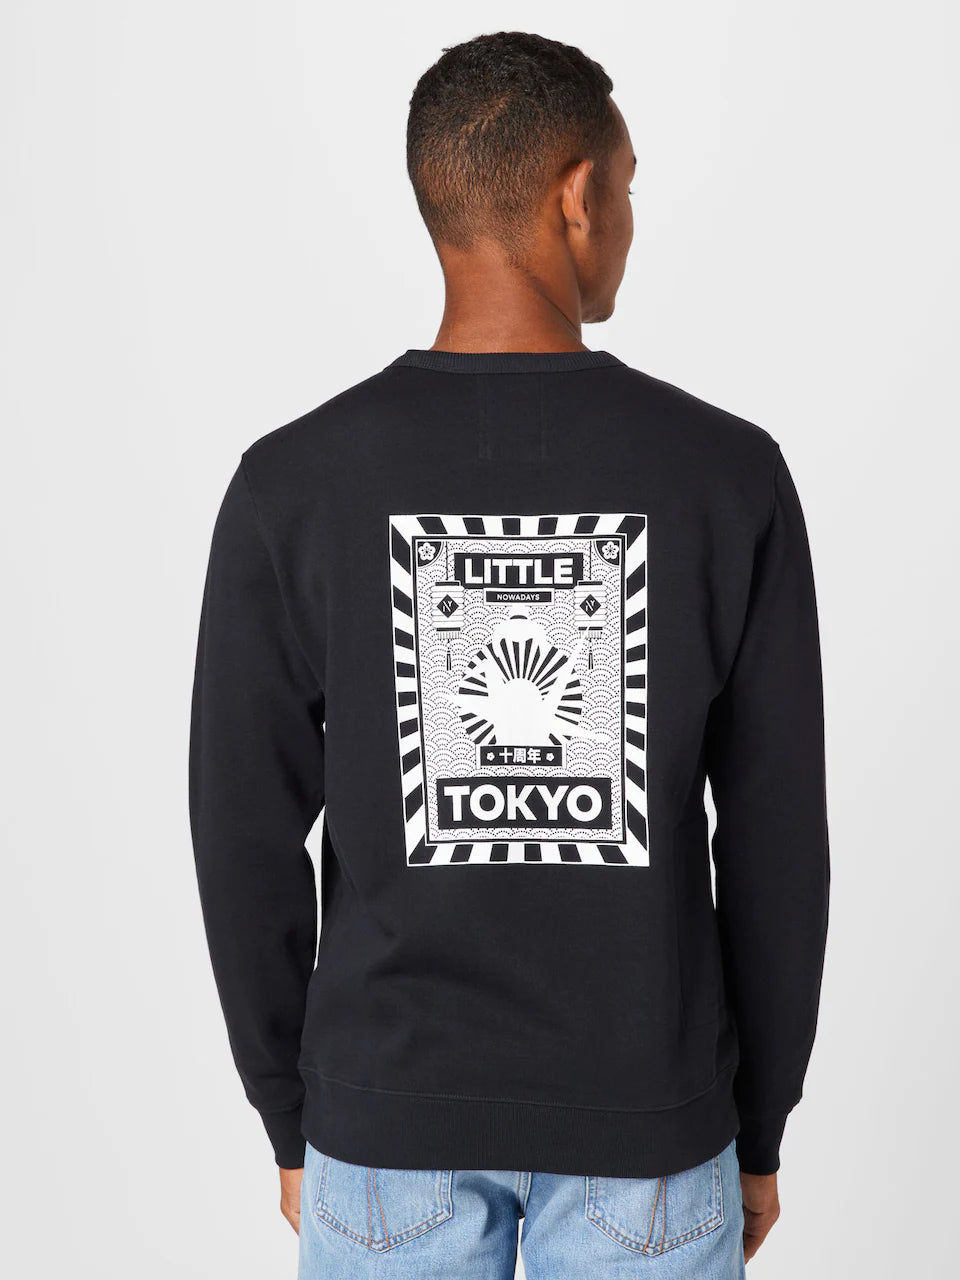 Nowadays little Tokyo sweatshirt in black